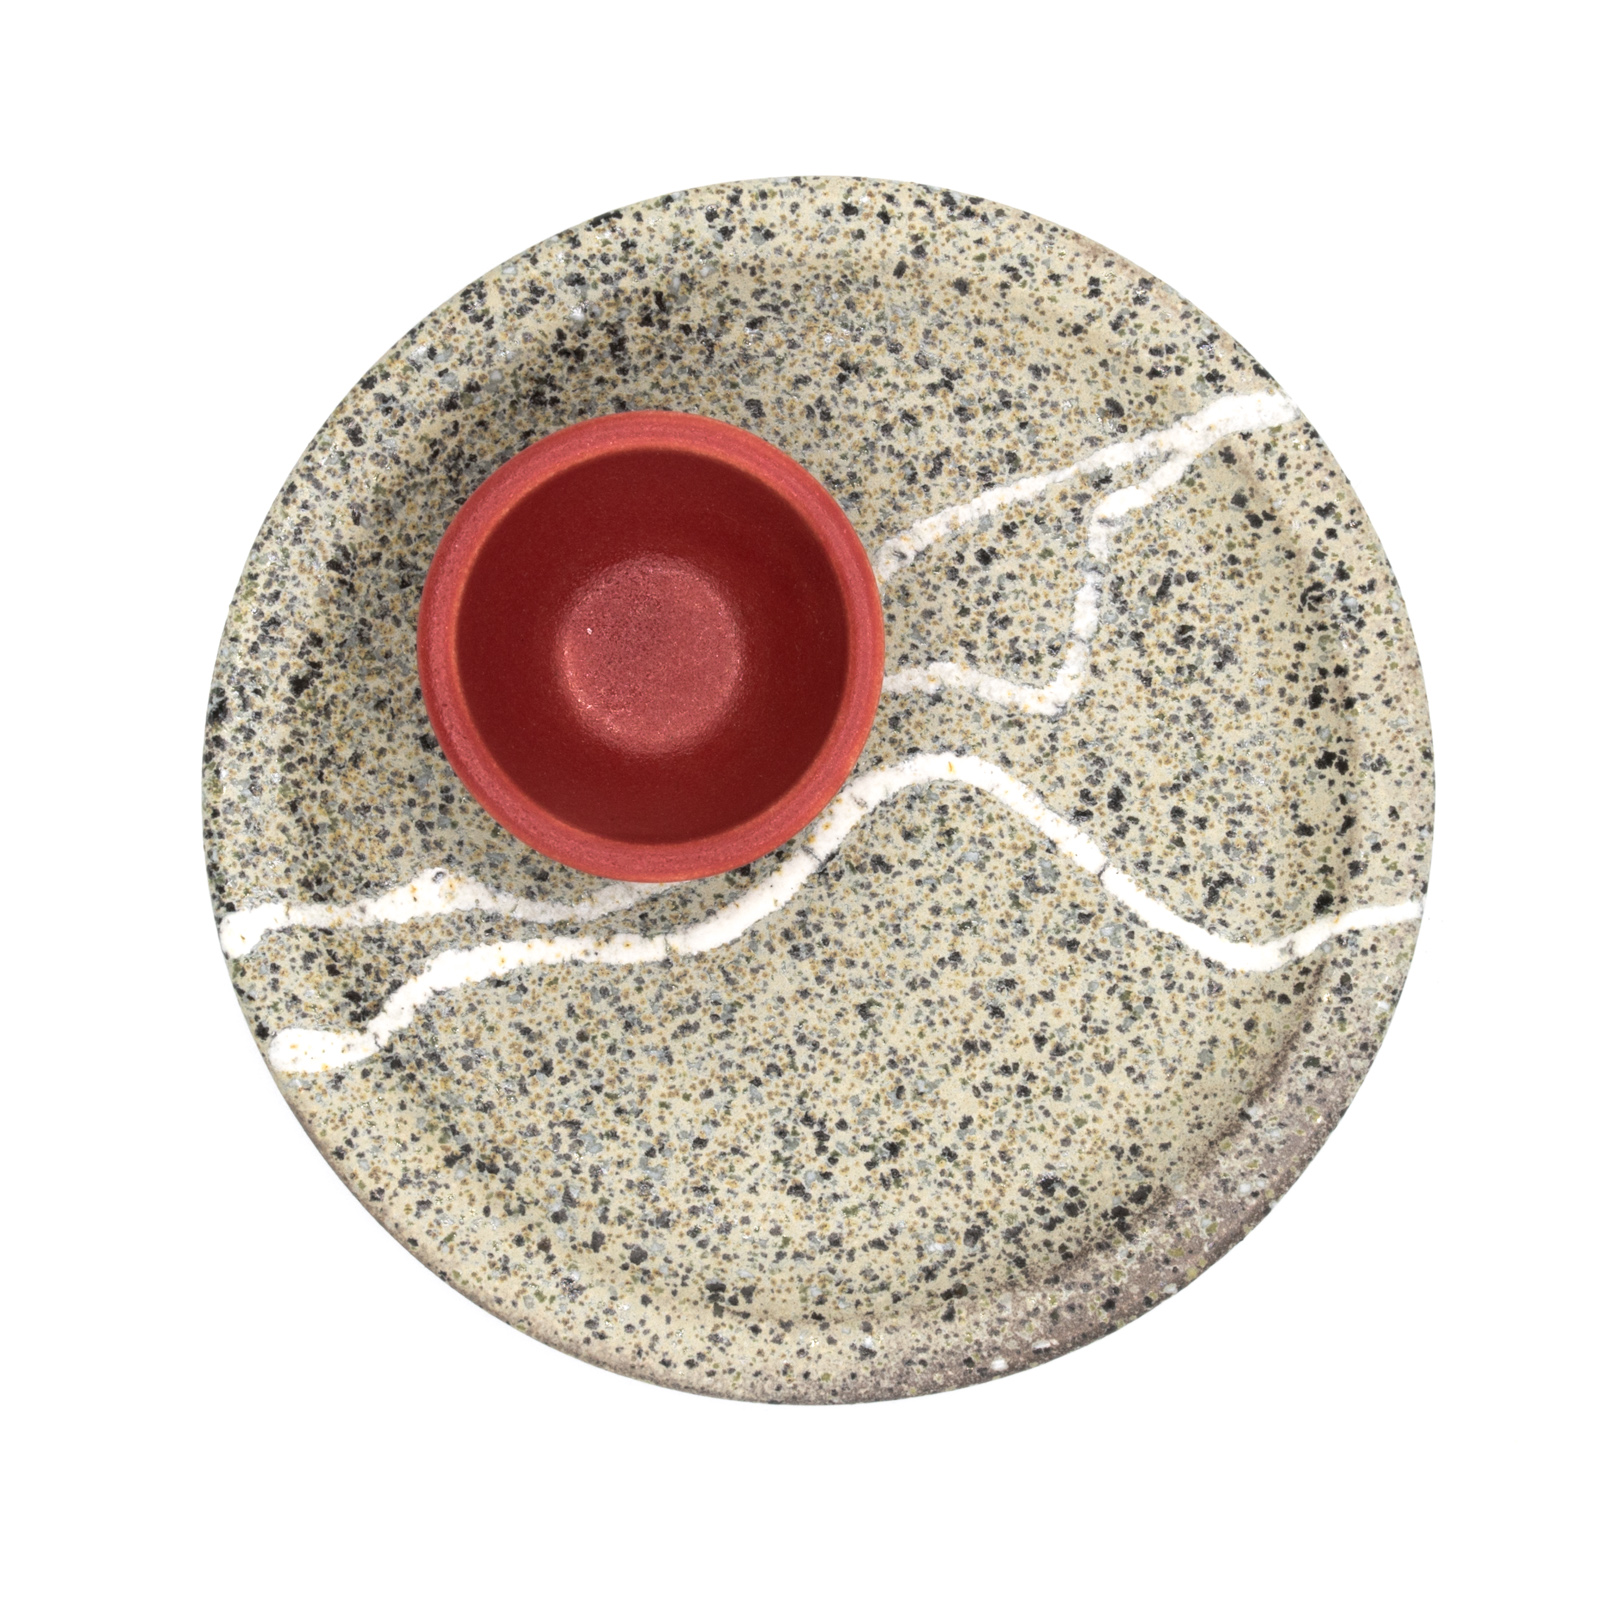 Eierbecher Keramik | rot 